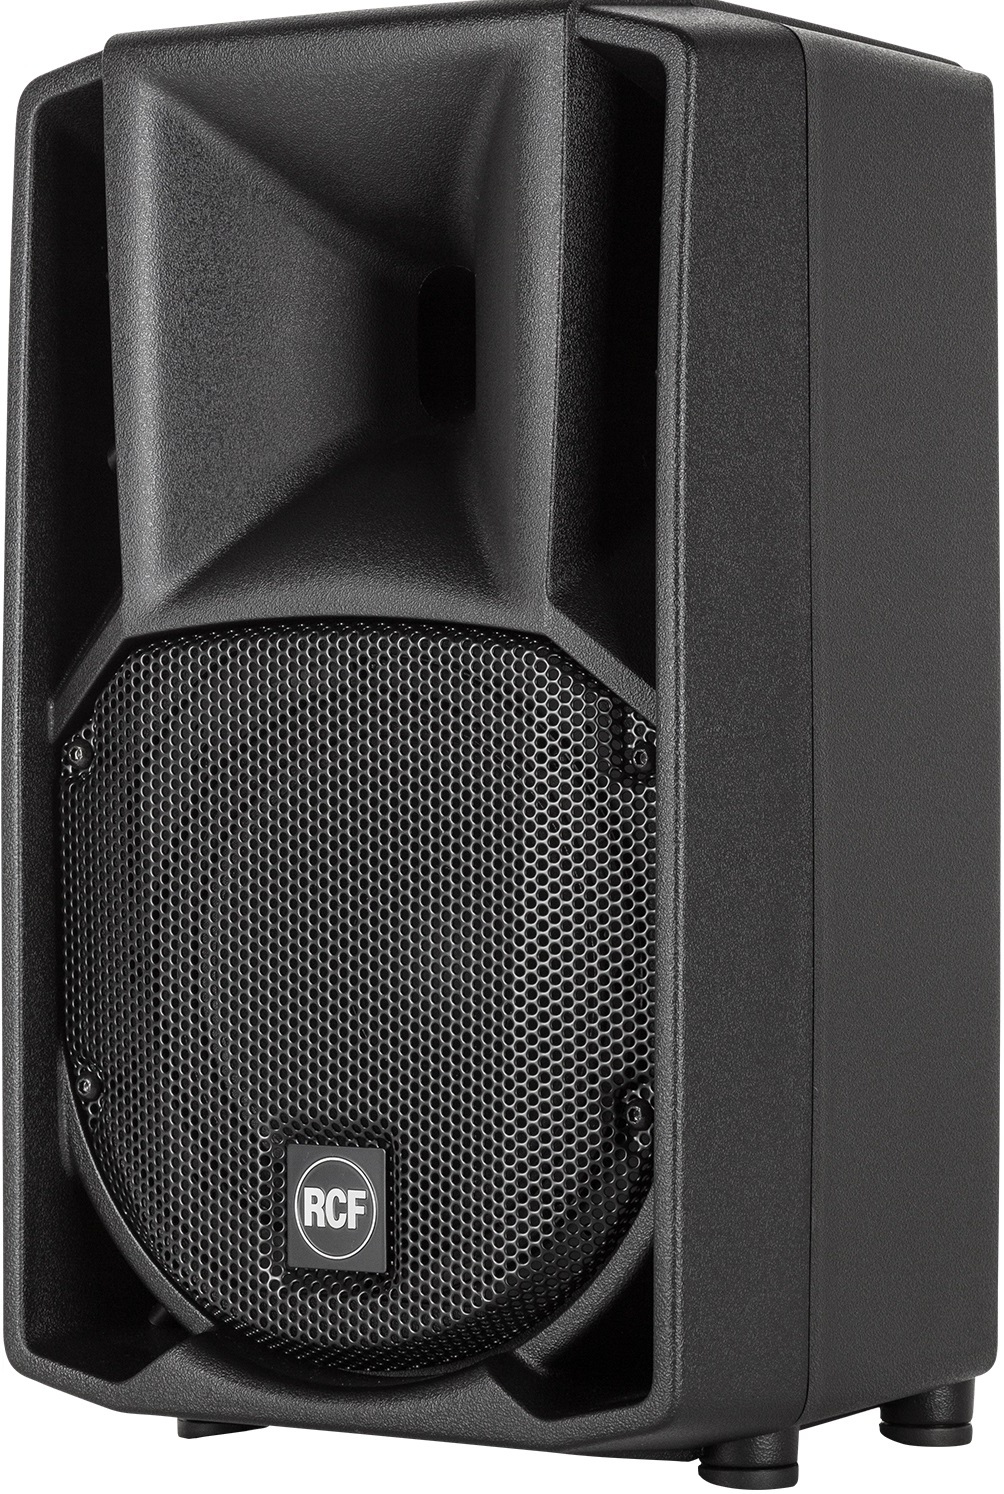 Rcf Art 735-a Mk4 - Active full-range speaker - Main picture